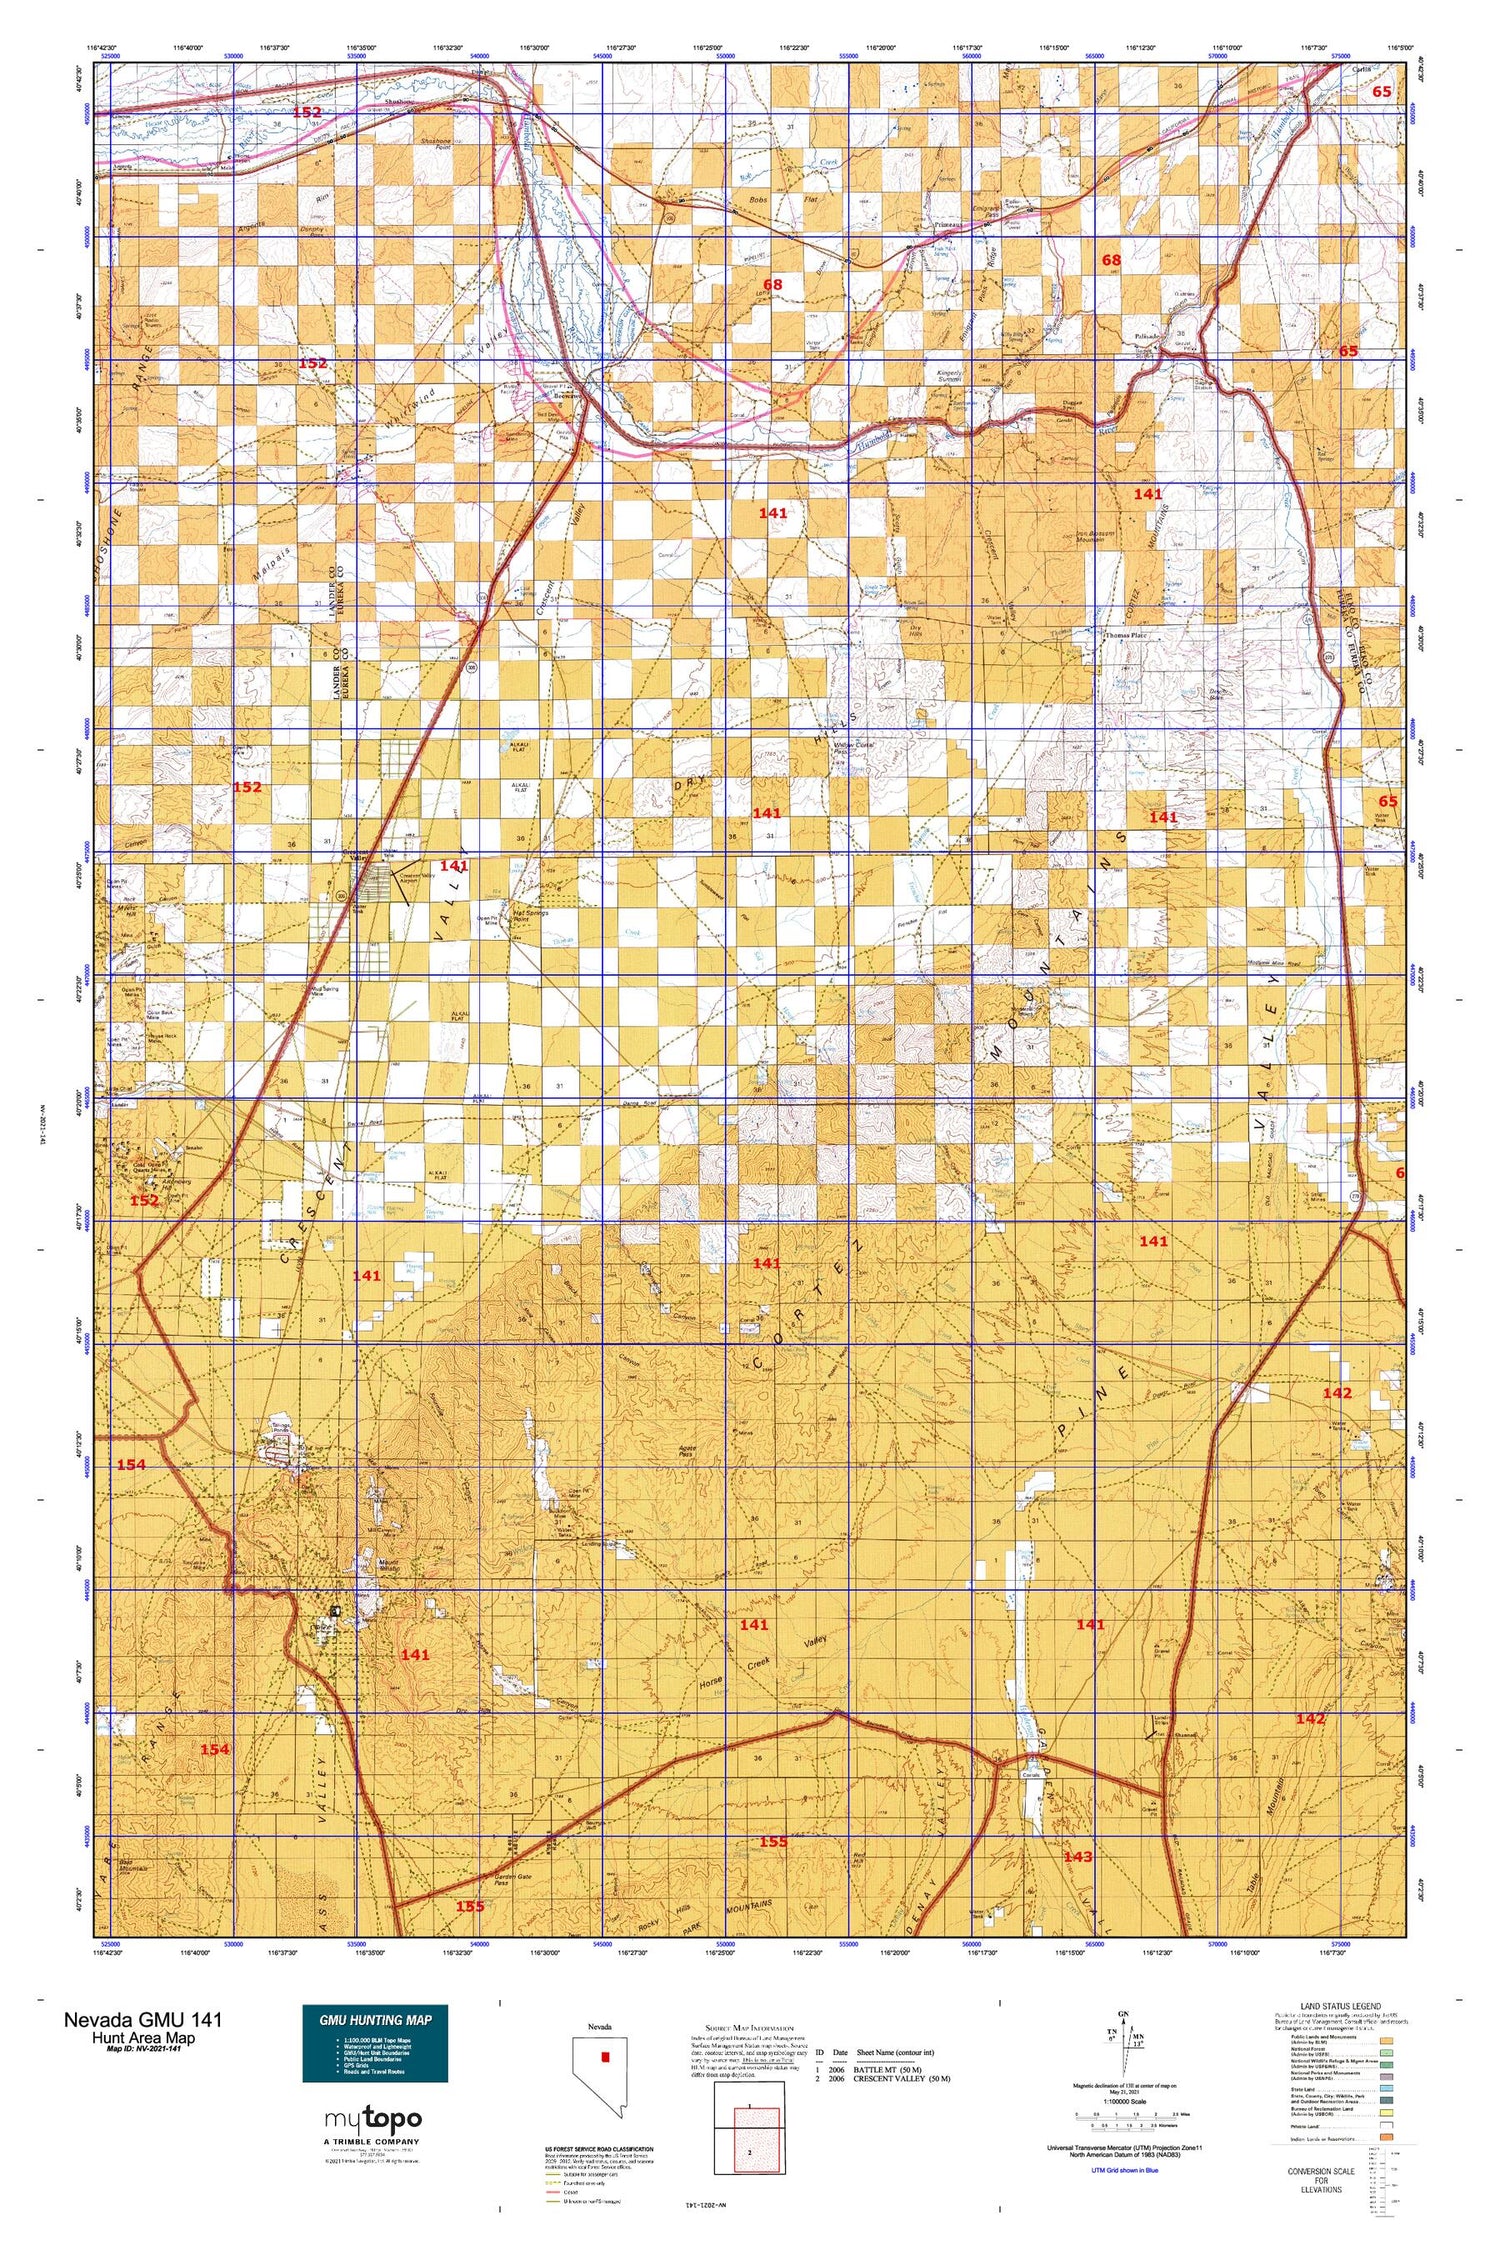 Nevada GMU 141 Map Image